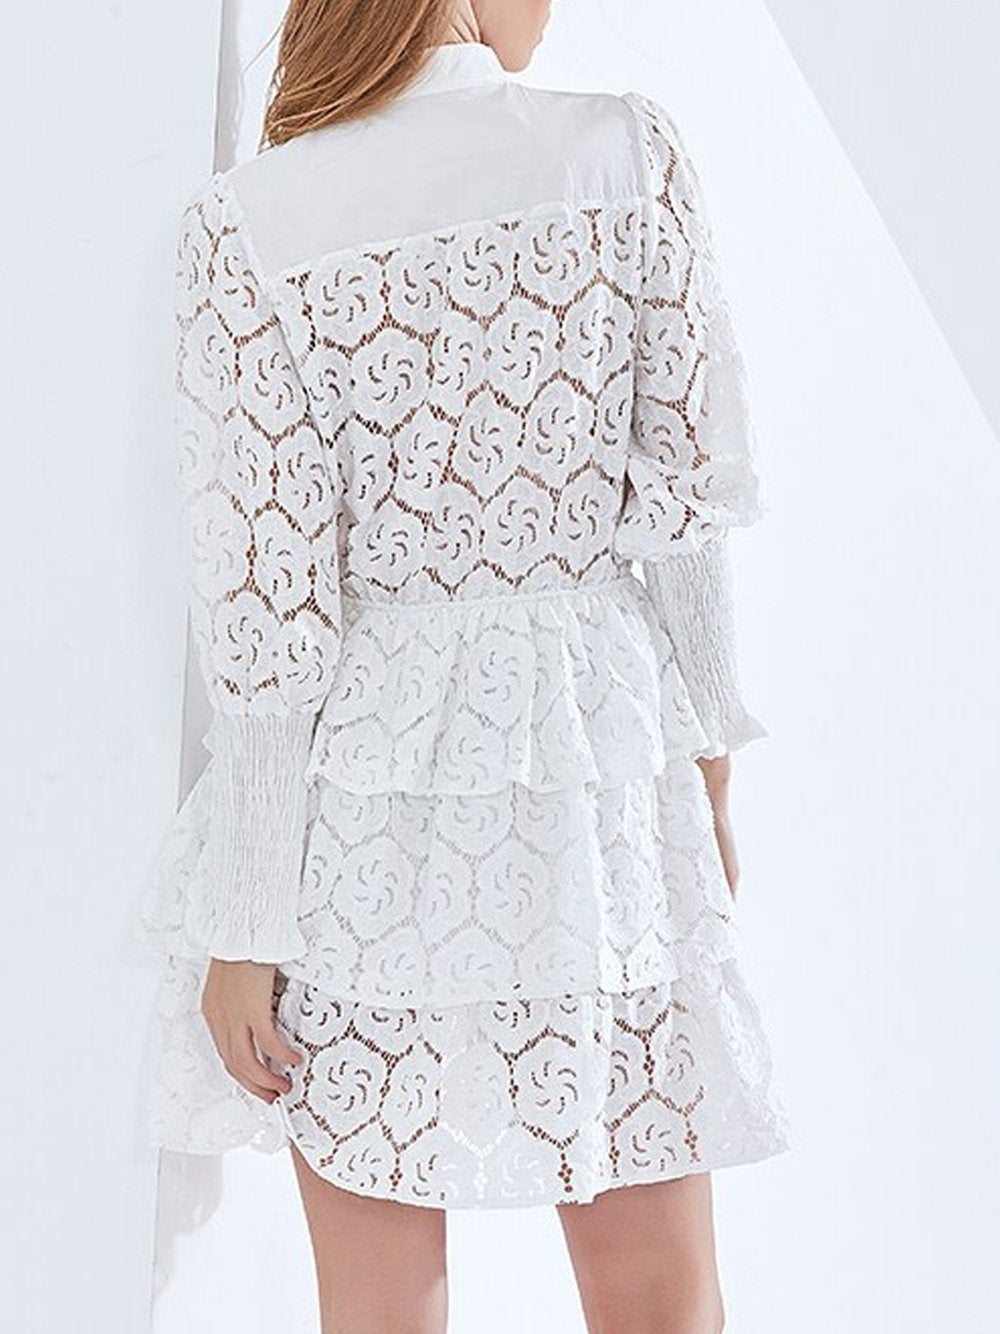 ELEANOR Embroidery Mini Dress